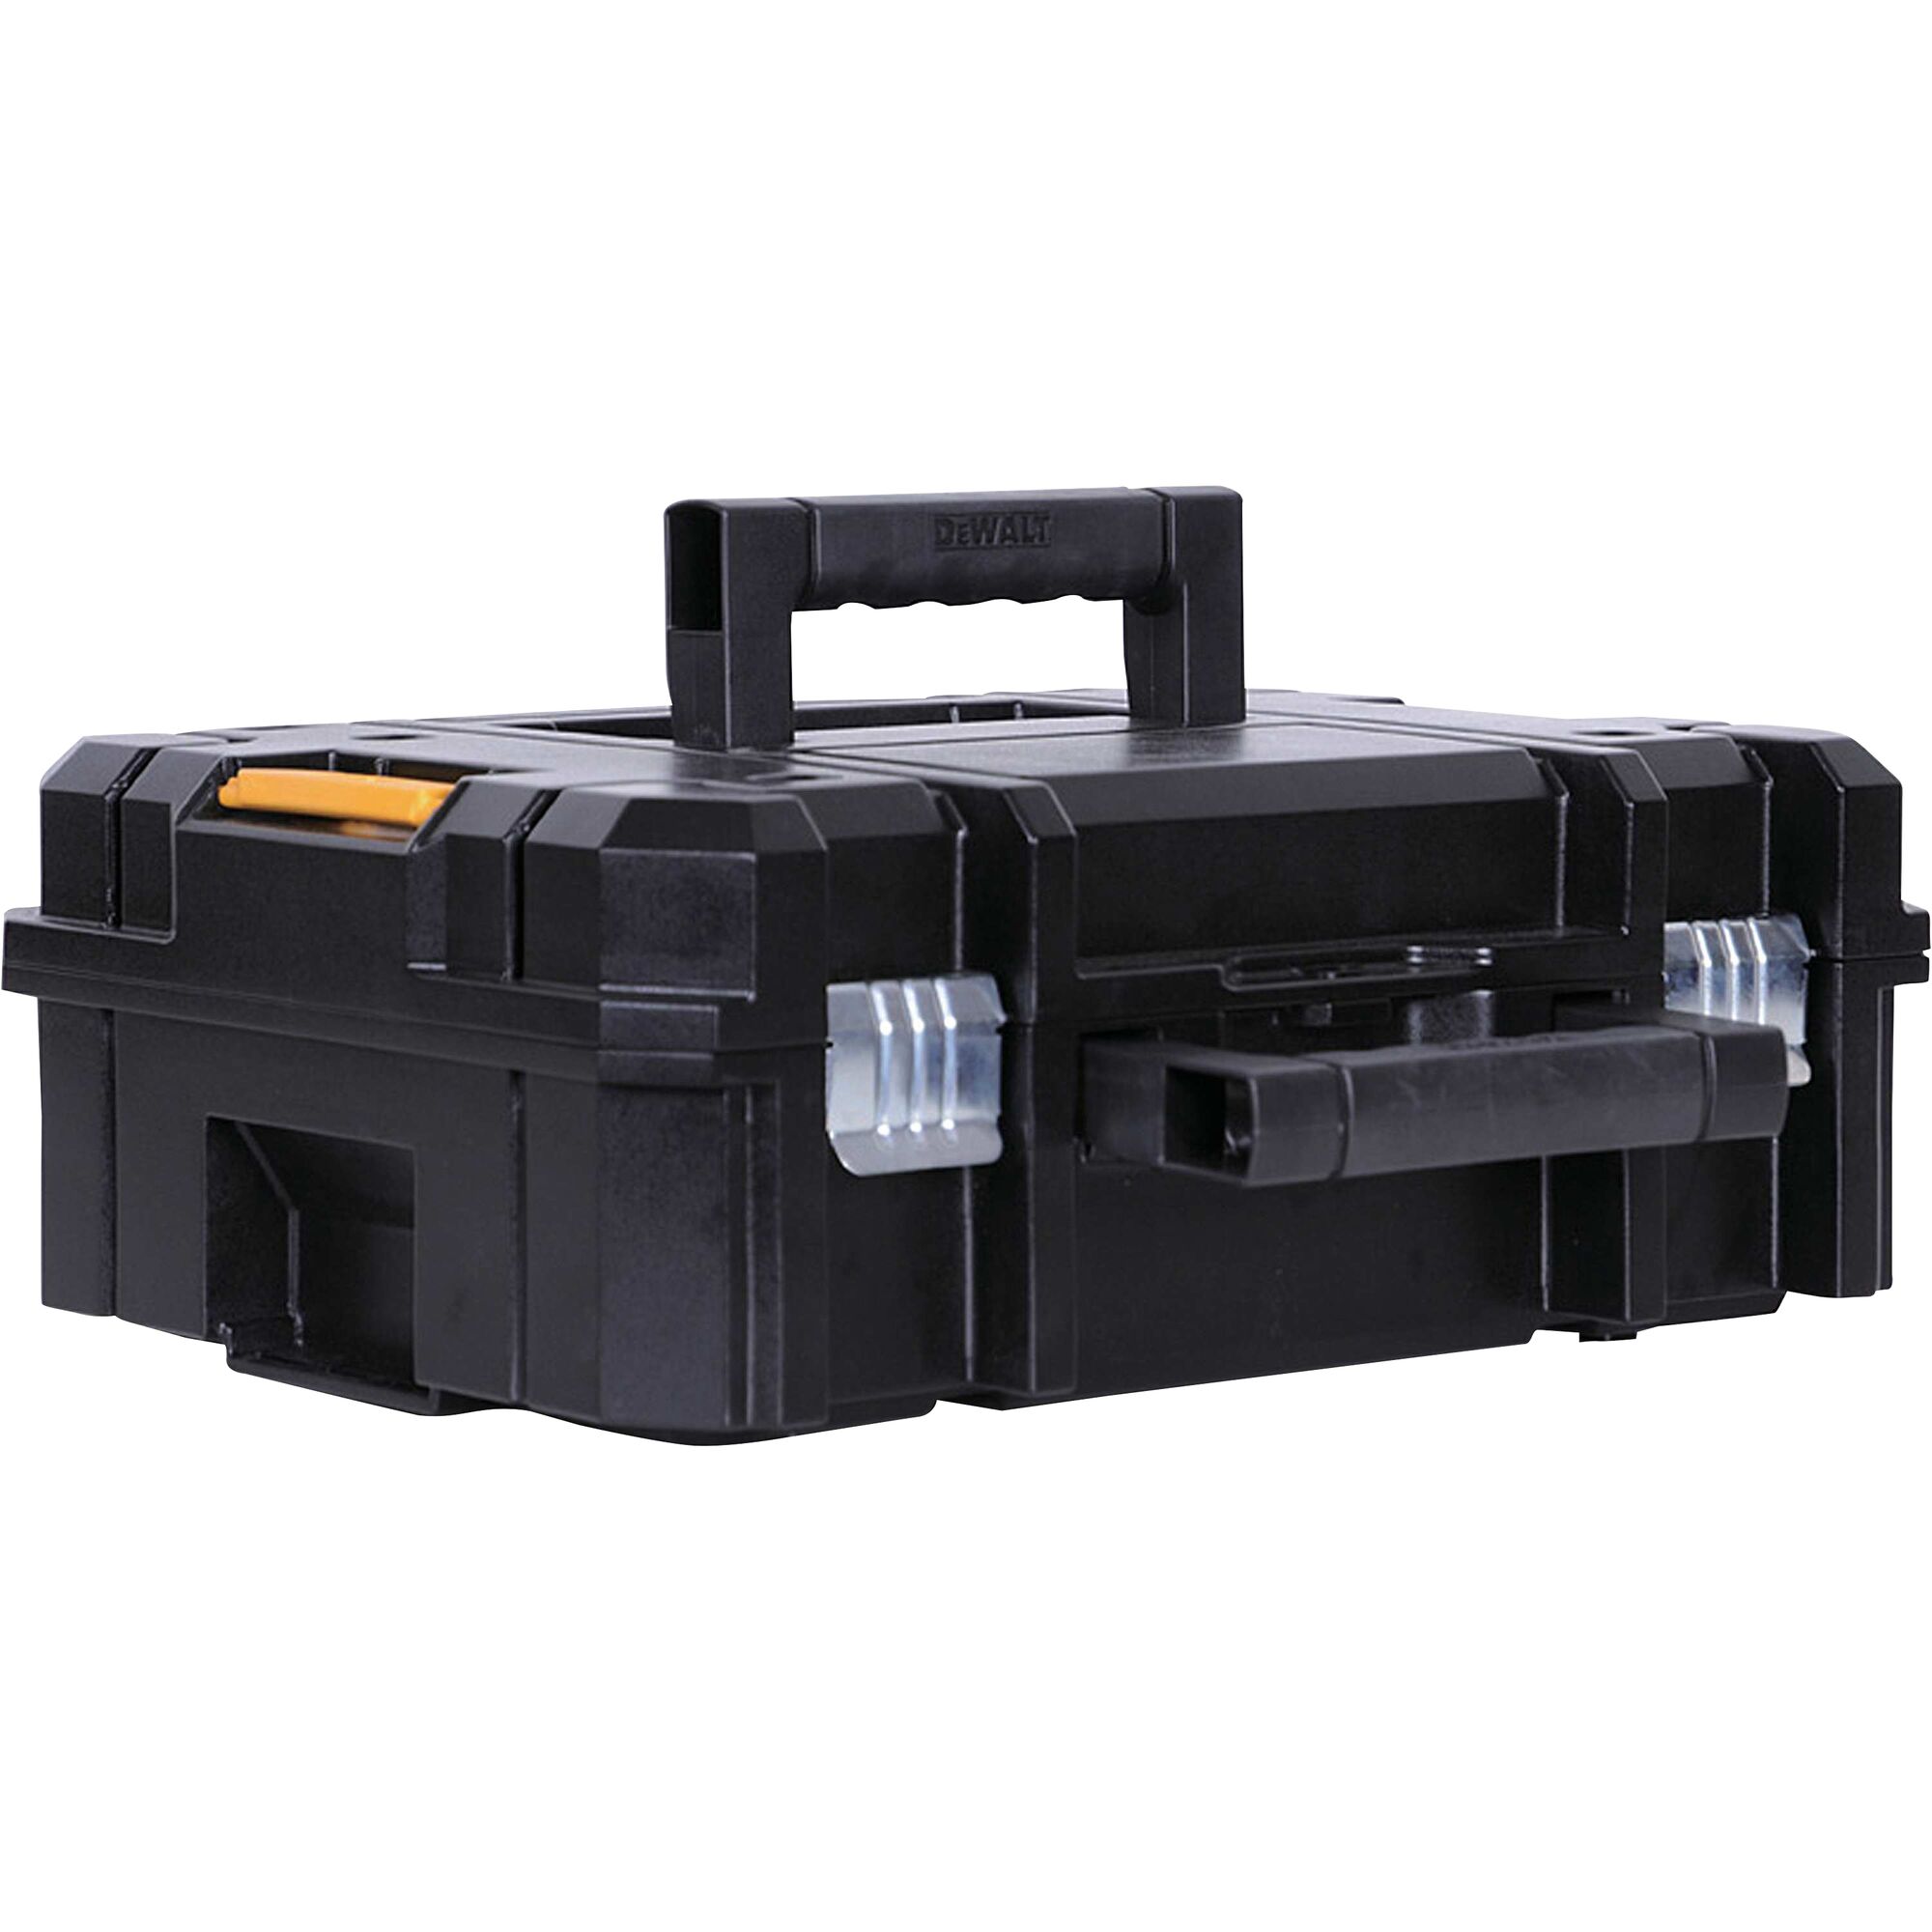 DeWalt DWST17807 TSTAK Ii Series Flat Top Tool Box, 66 Pound, Plastic,  Black, 4-Compartment: Tool Boxes Plastic (076174712155-1)